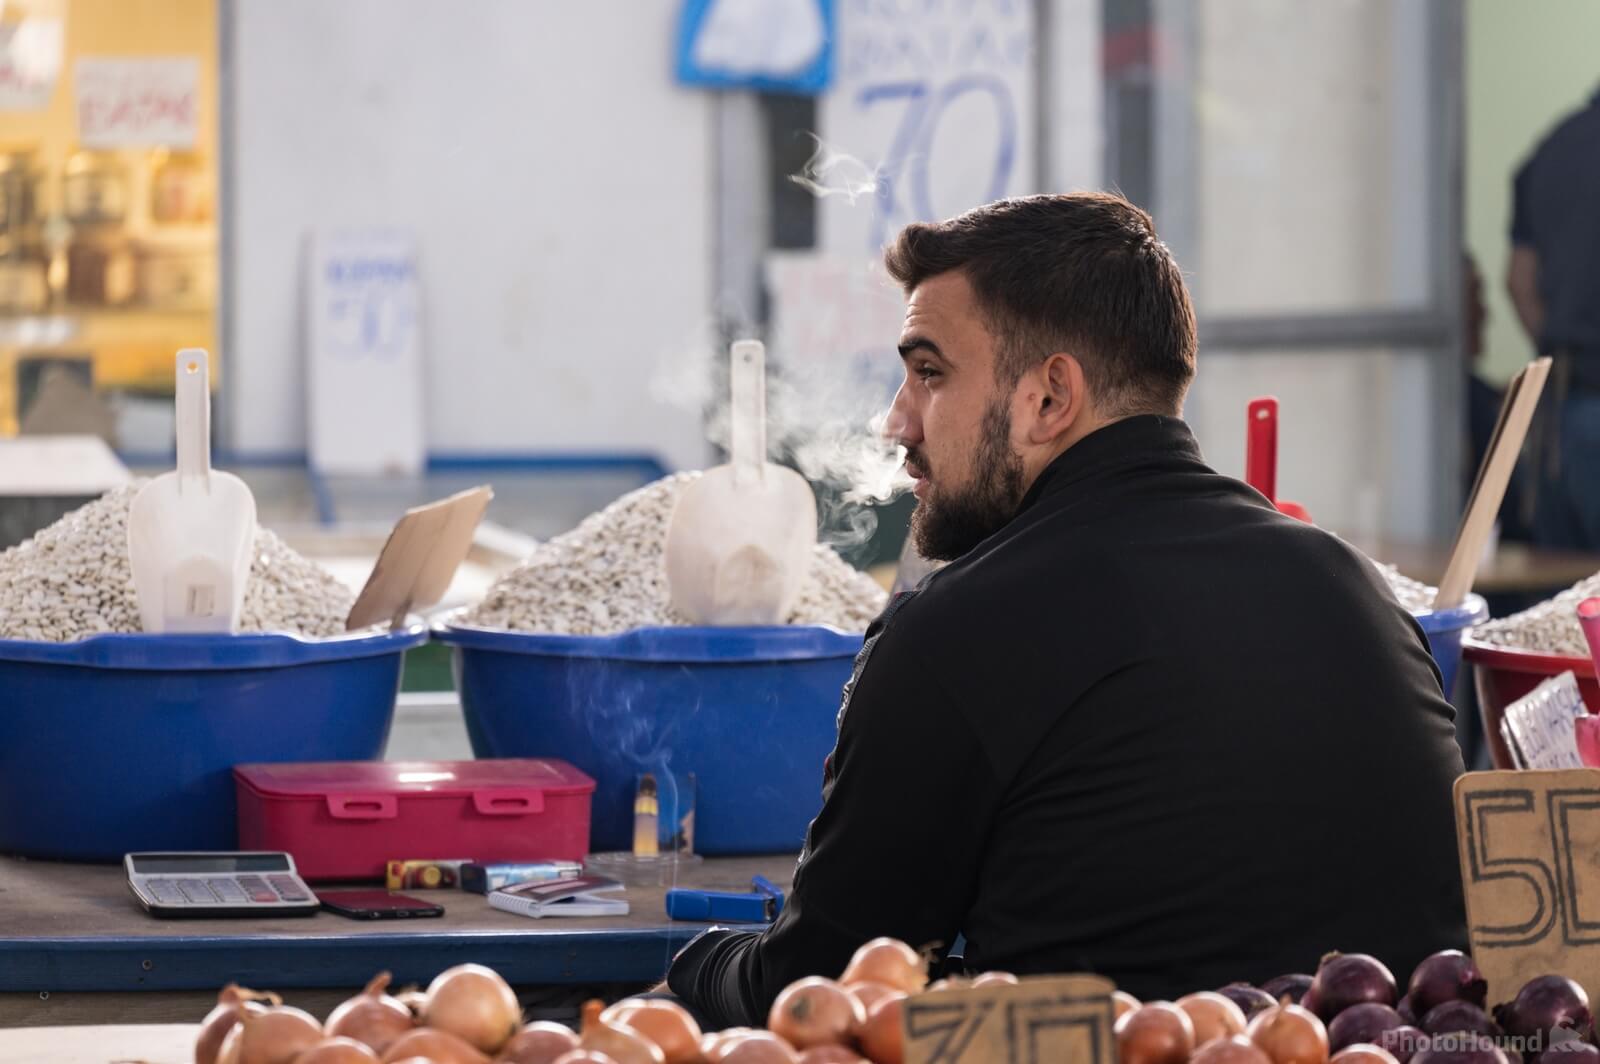 Image of Bit Pazar (Food Market) by Luka Esenko